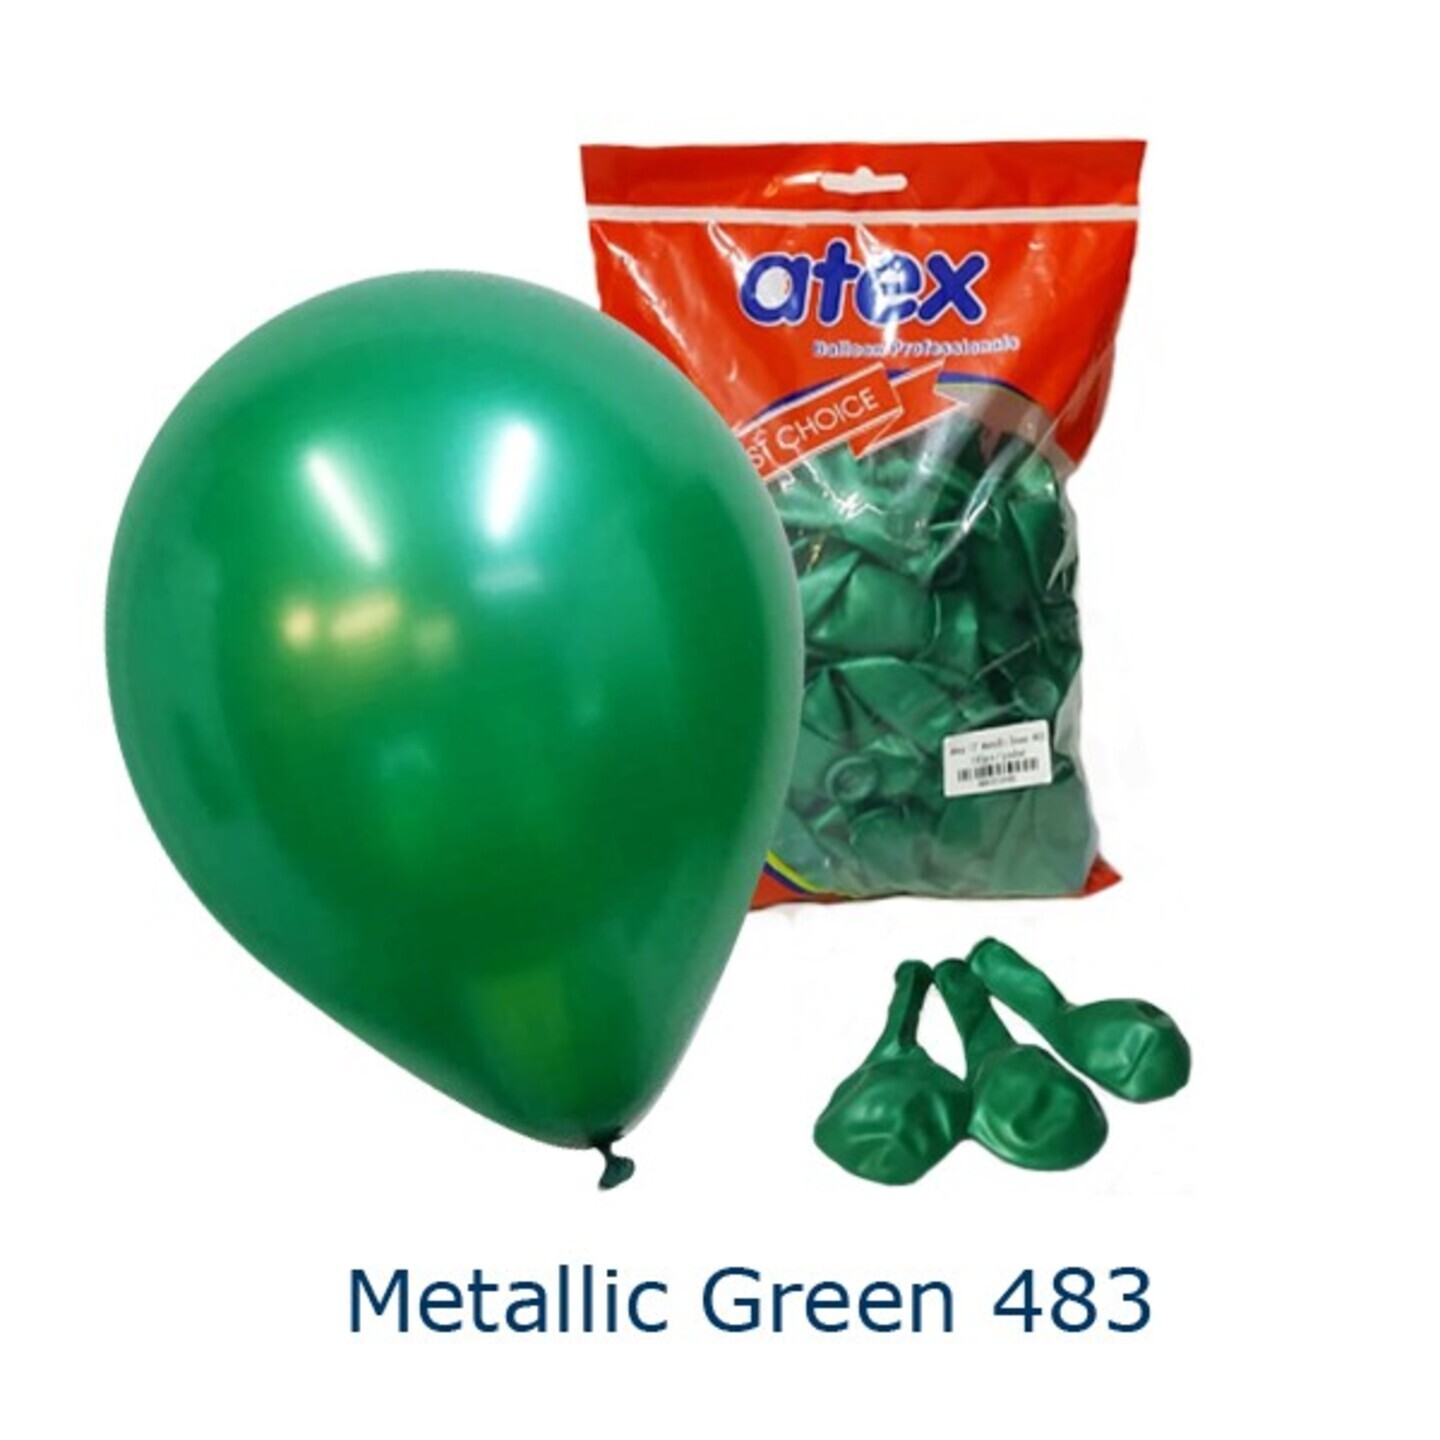 Metallic Green 483